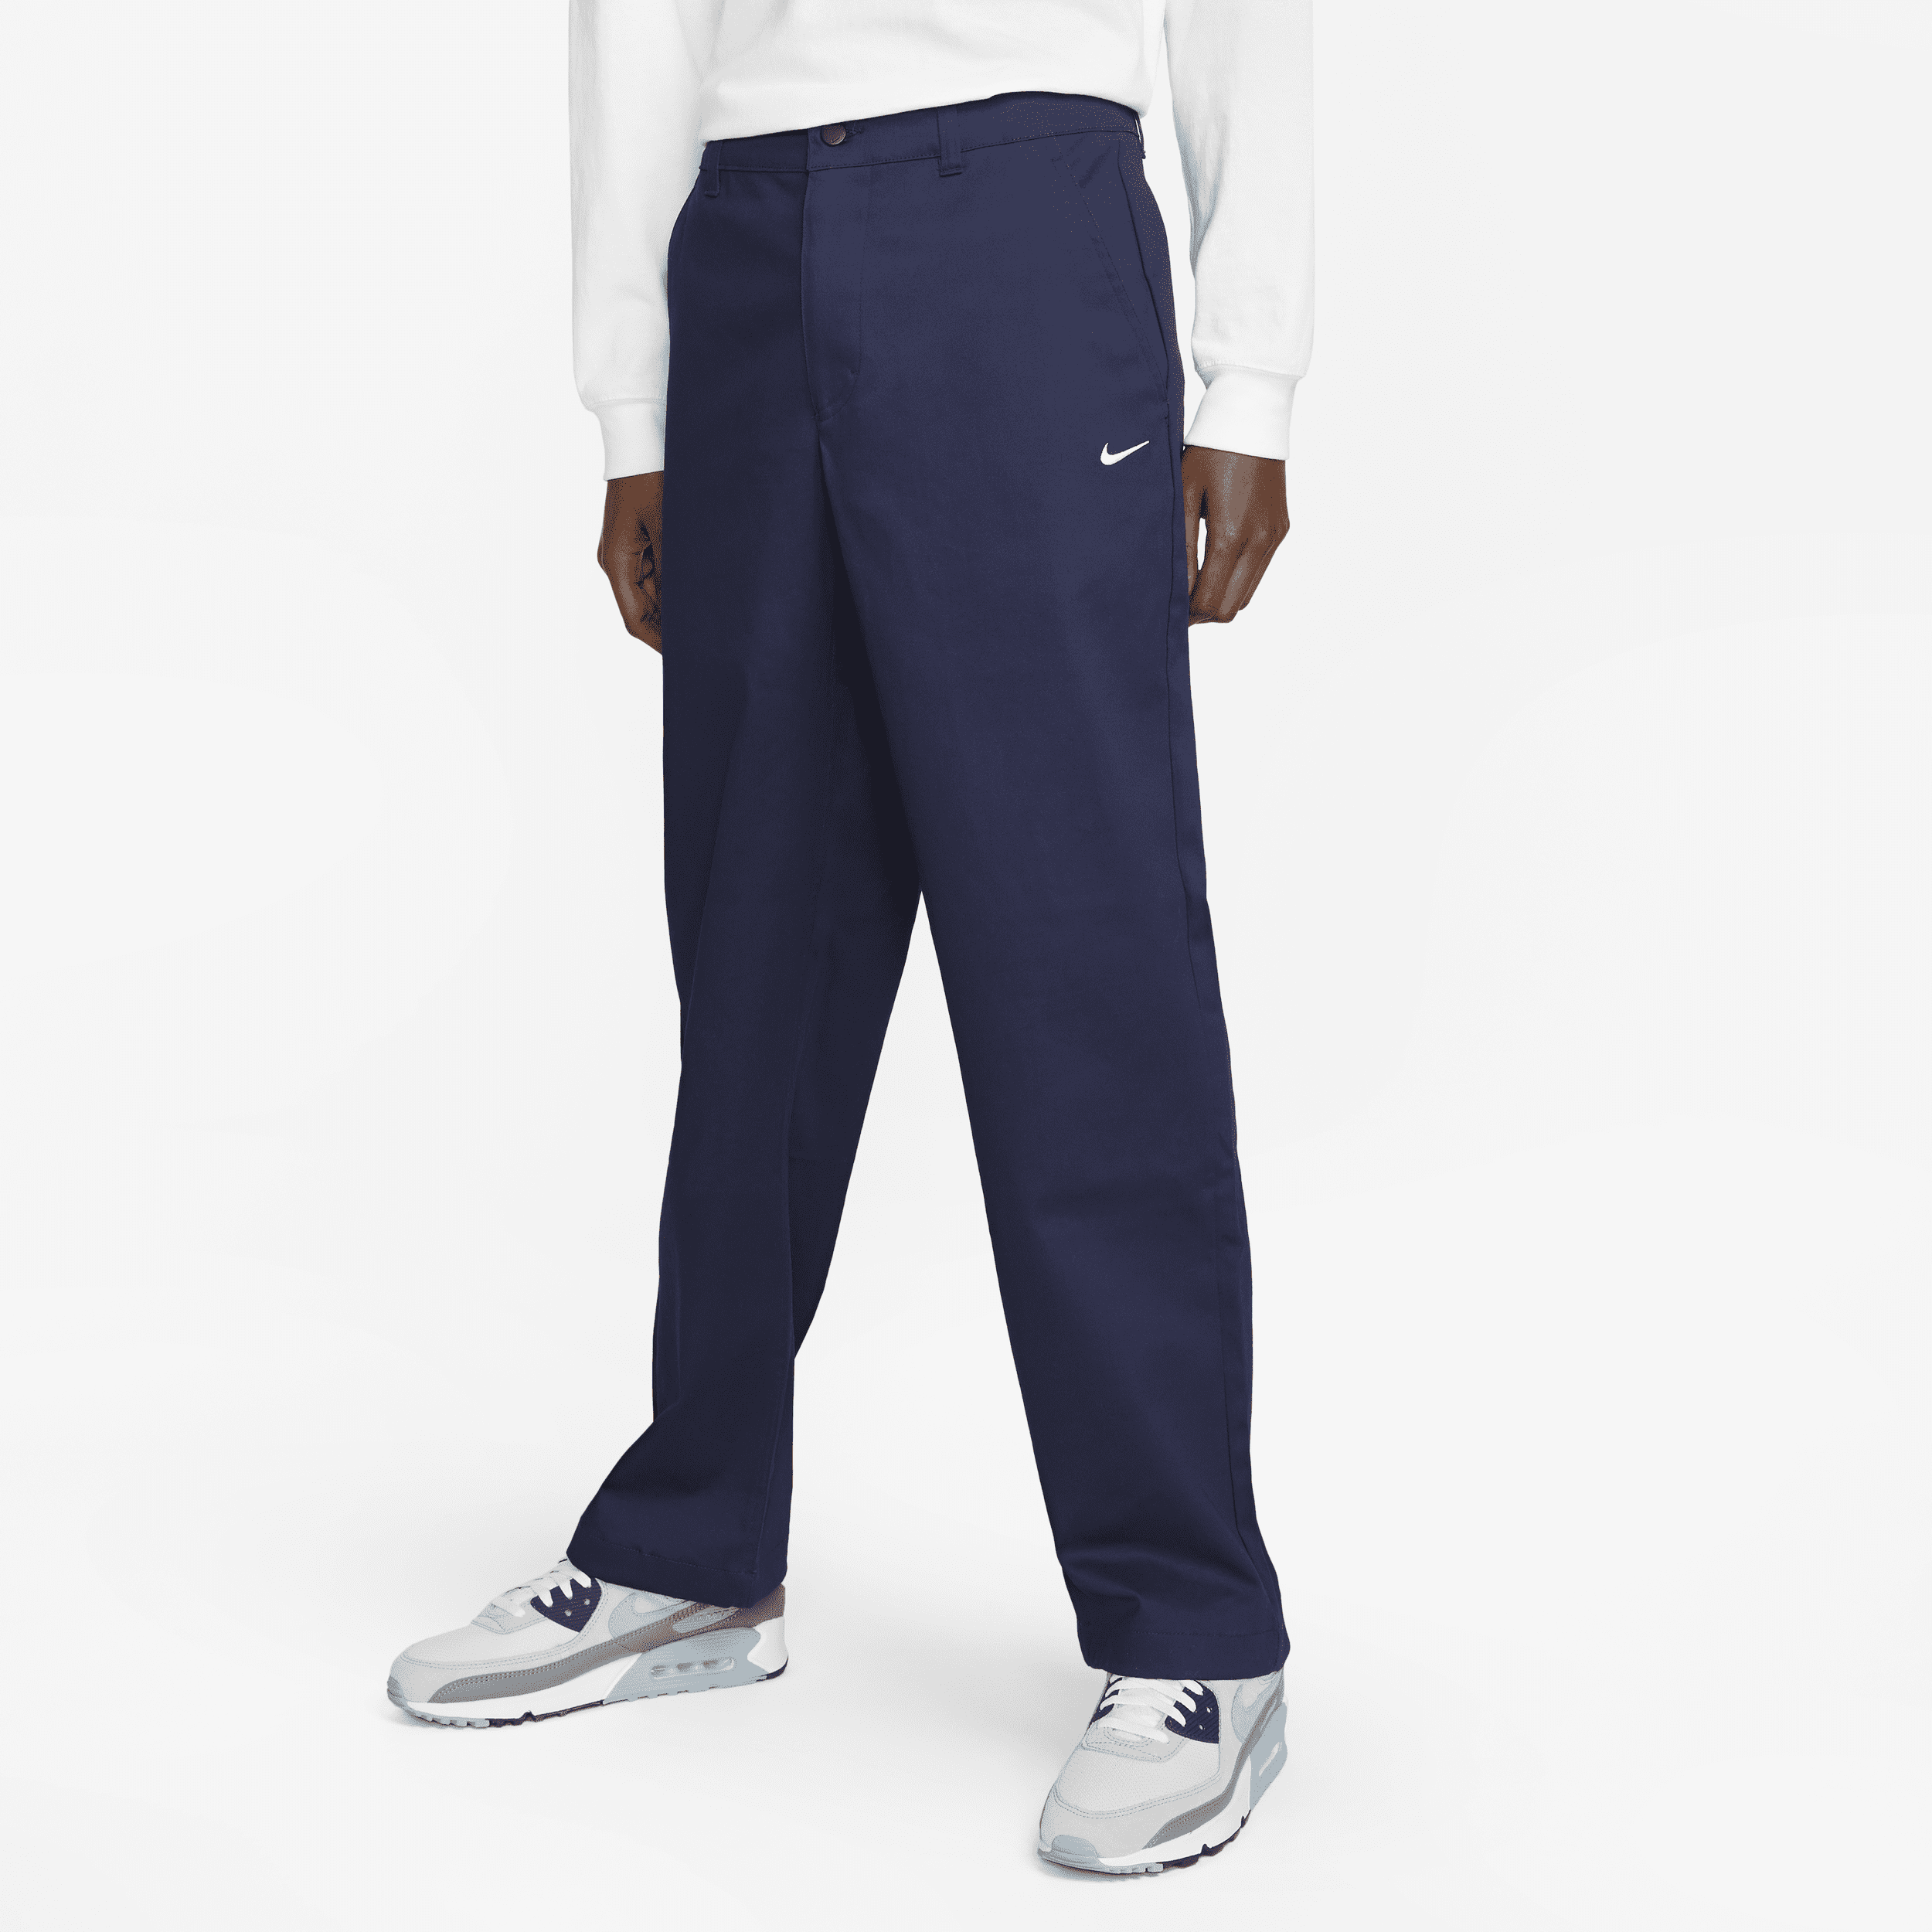 Pantaloni El Chino Nike Life – Uomo - Blu